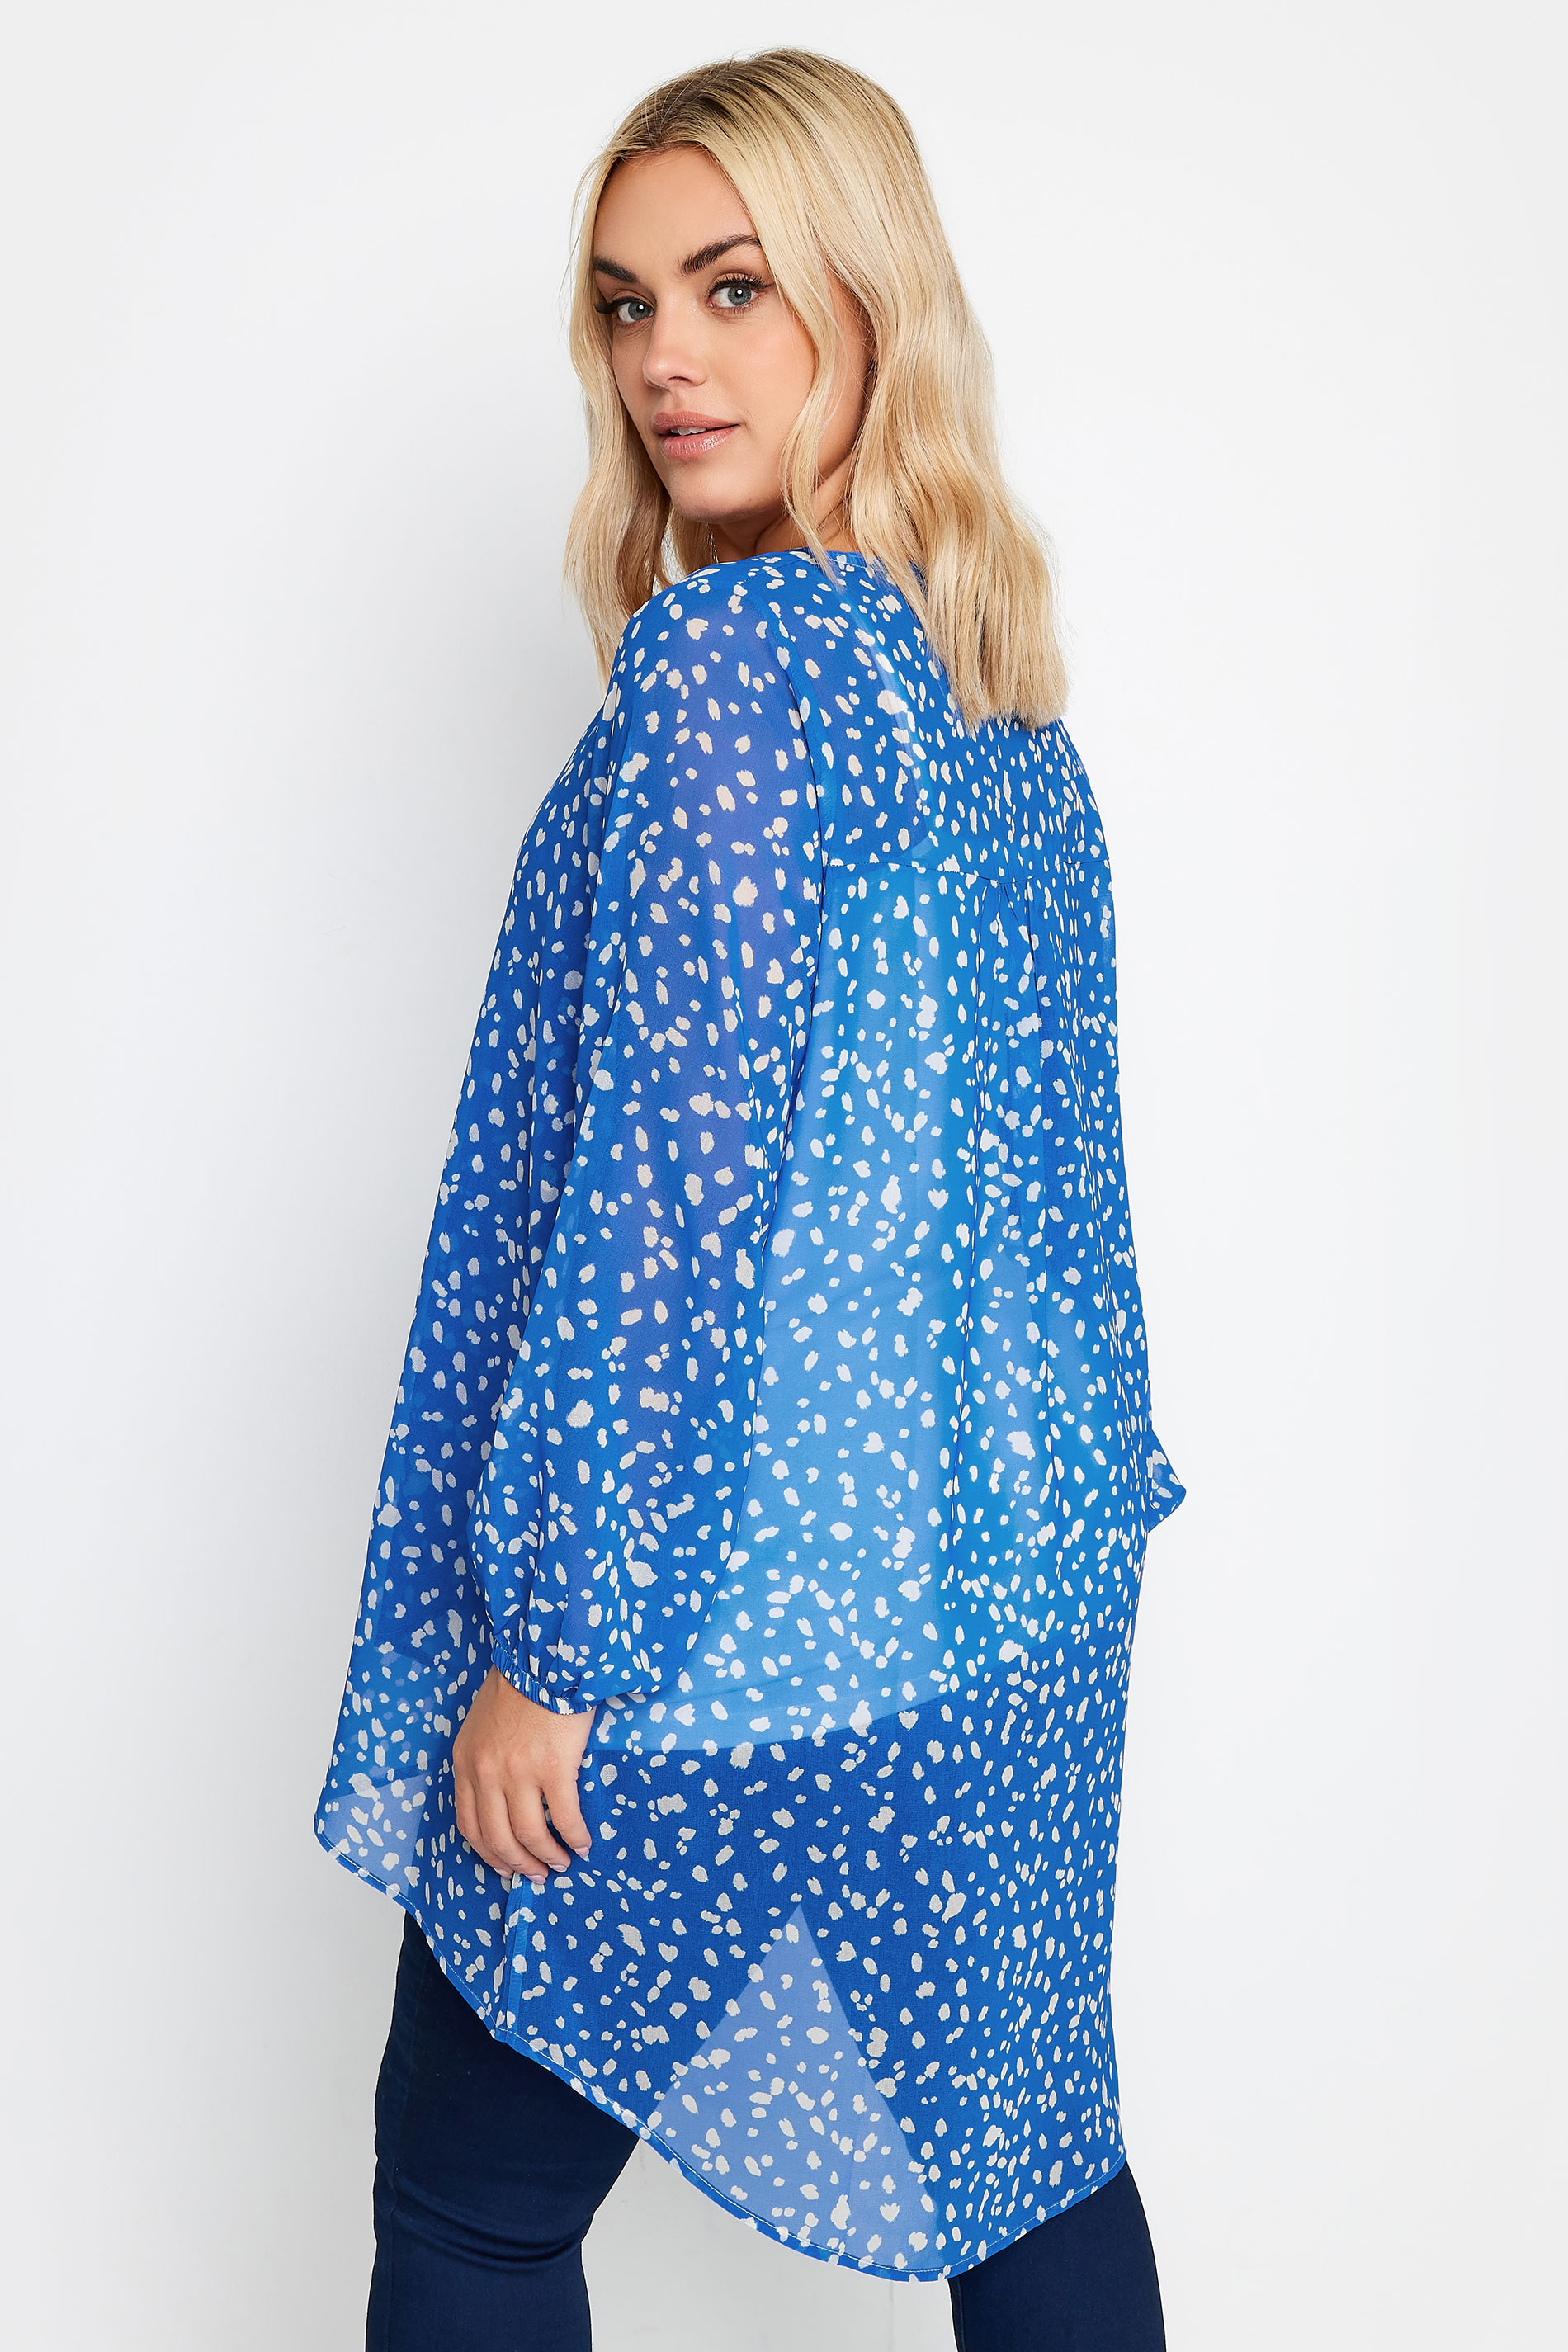 YOURS LONDON Plus Size Blue Dalmatian Print Wrap Front Blouse | Yours Clothing 3